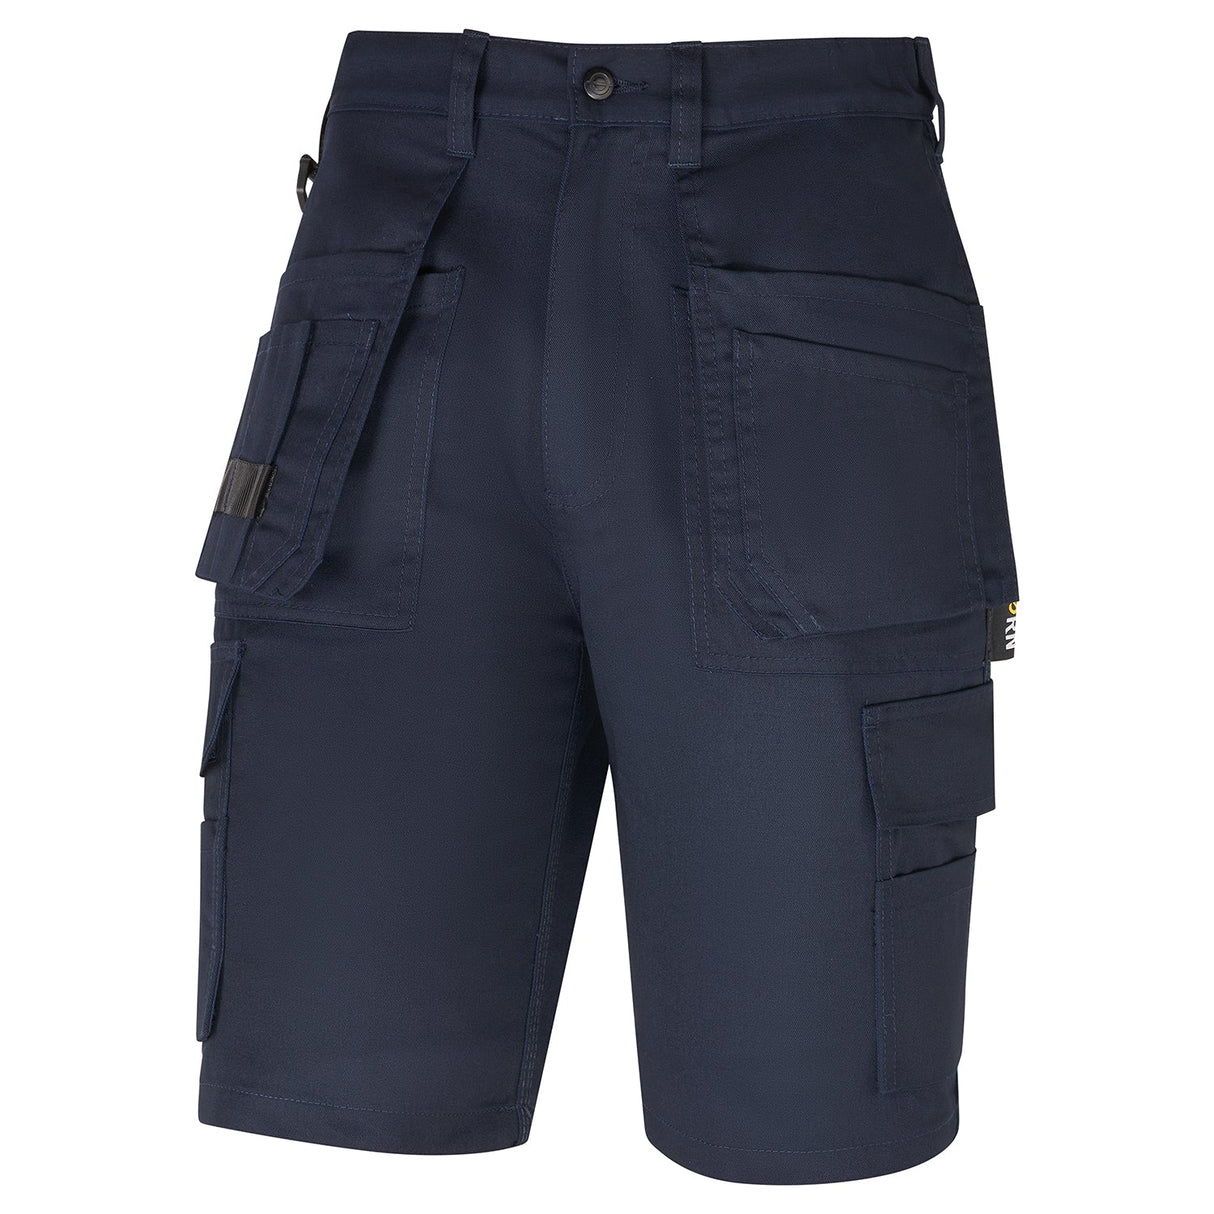 Orn Clothing Merlin Tradesman Shorts